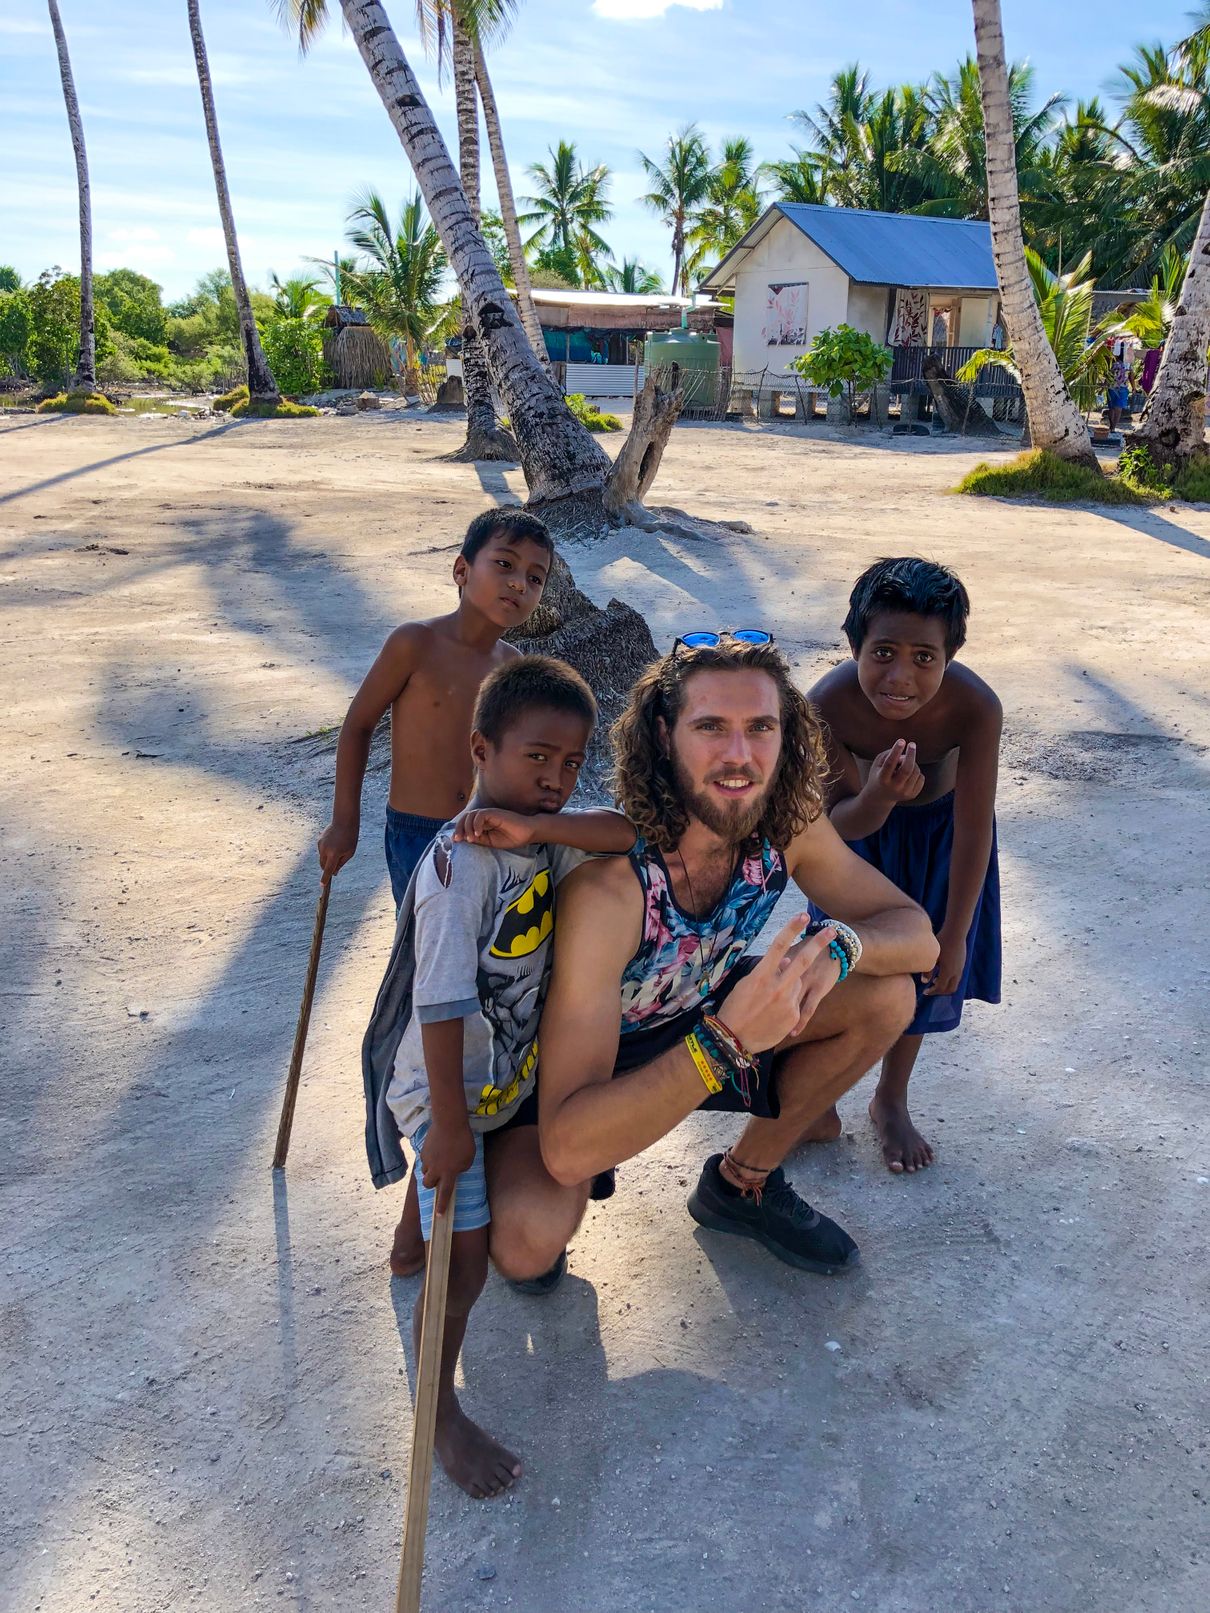 me and three local kids in North Tarawa